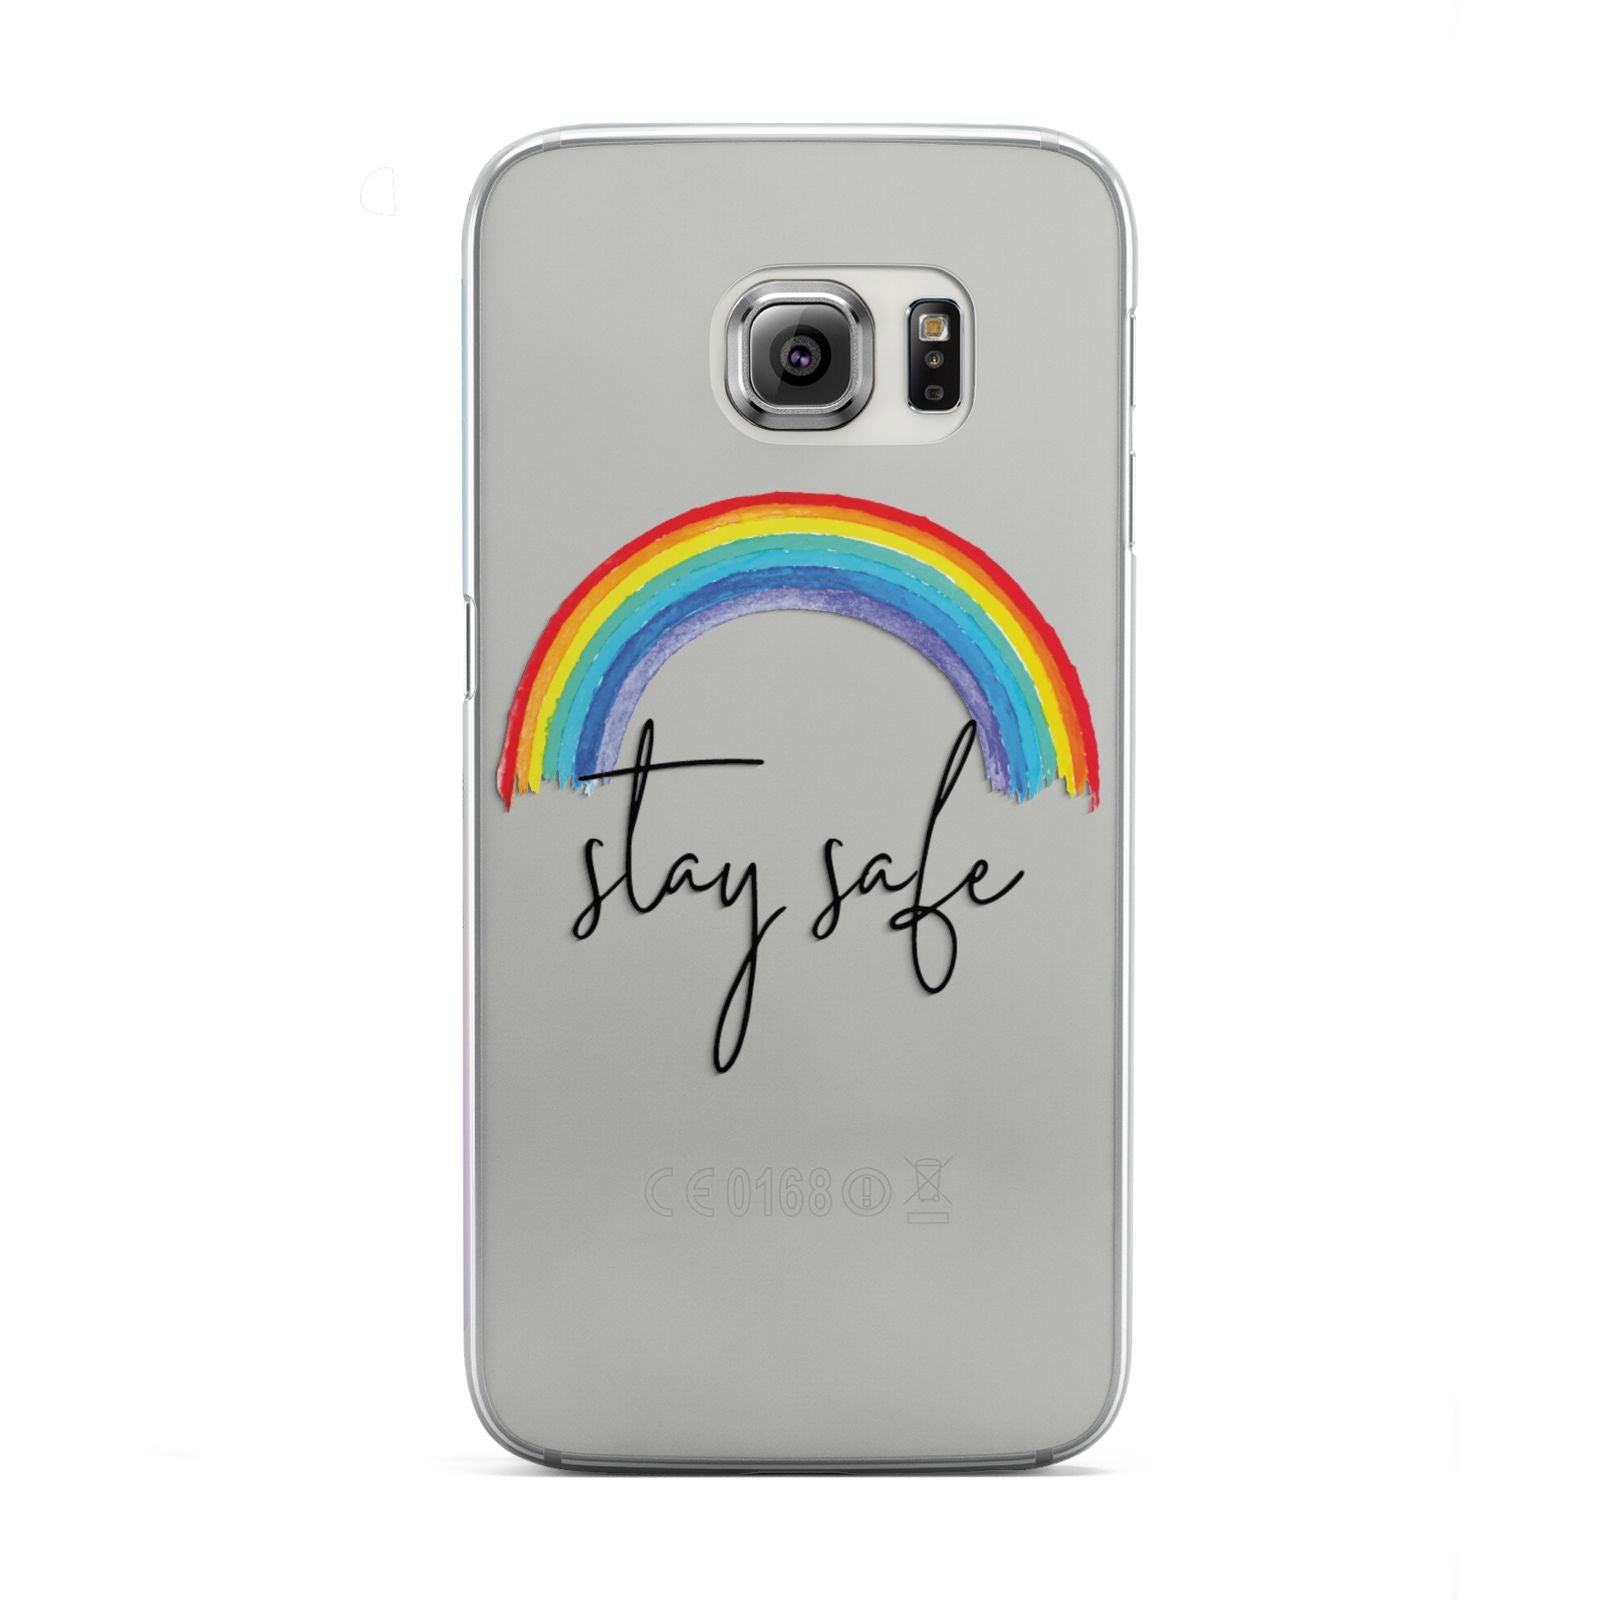 Stay Safe Rainbow Samsung Galaxy S6 Edge Case